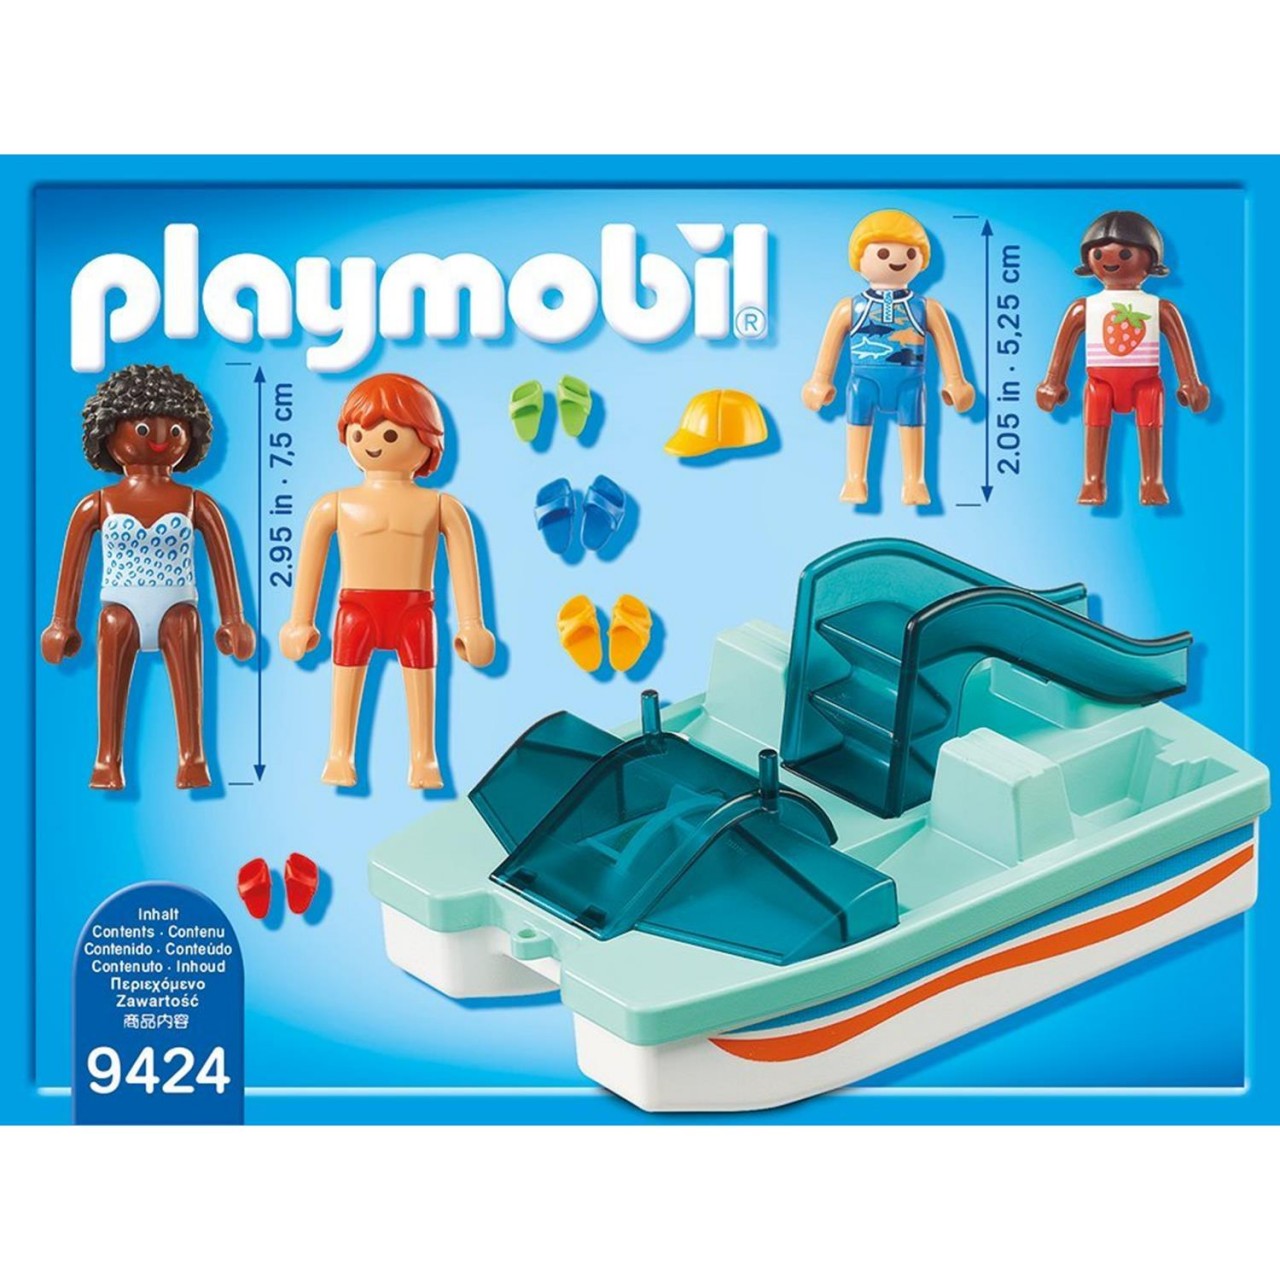 Playmobil 9424 Tretboot